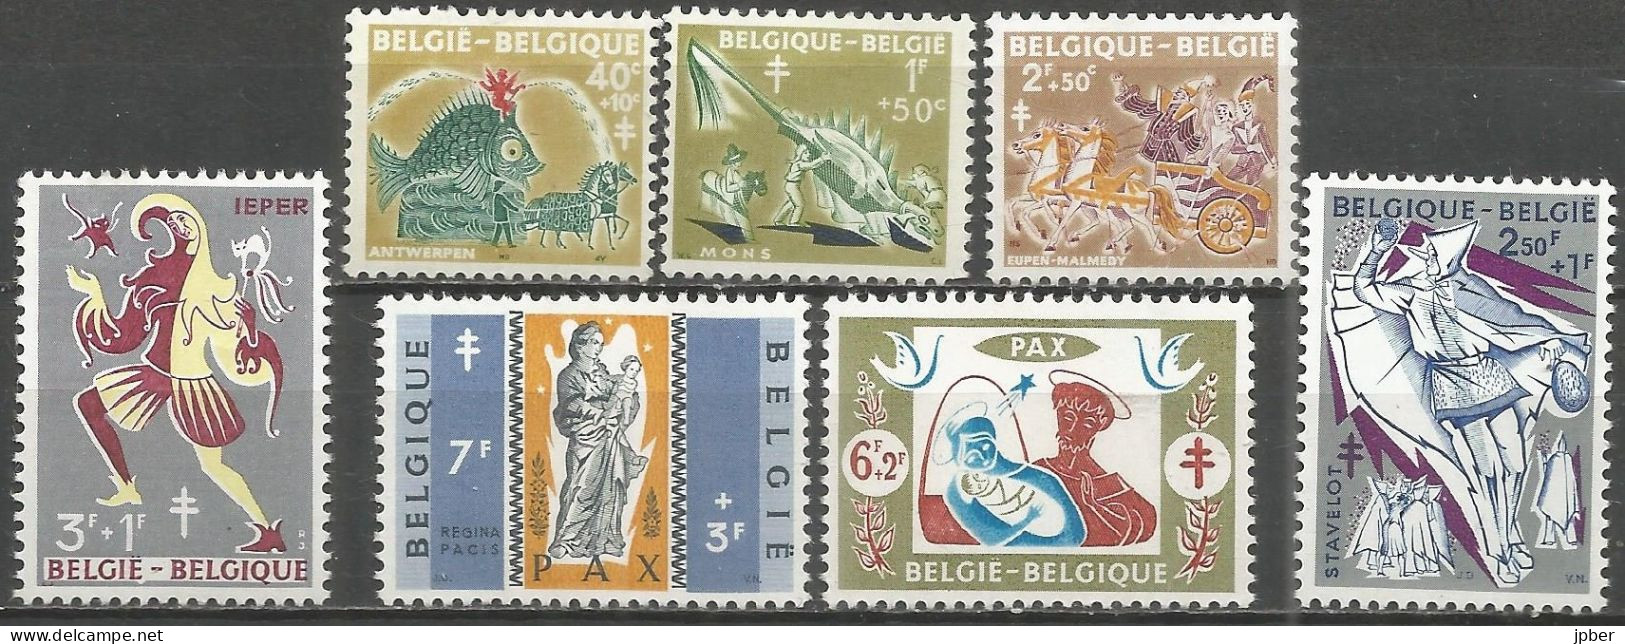 Belgique - Folklore - Anvers, Mons, Eupen, Stavelot, Ypres - N°1114 à 1120 */** - Ungebraucht